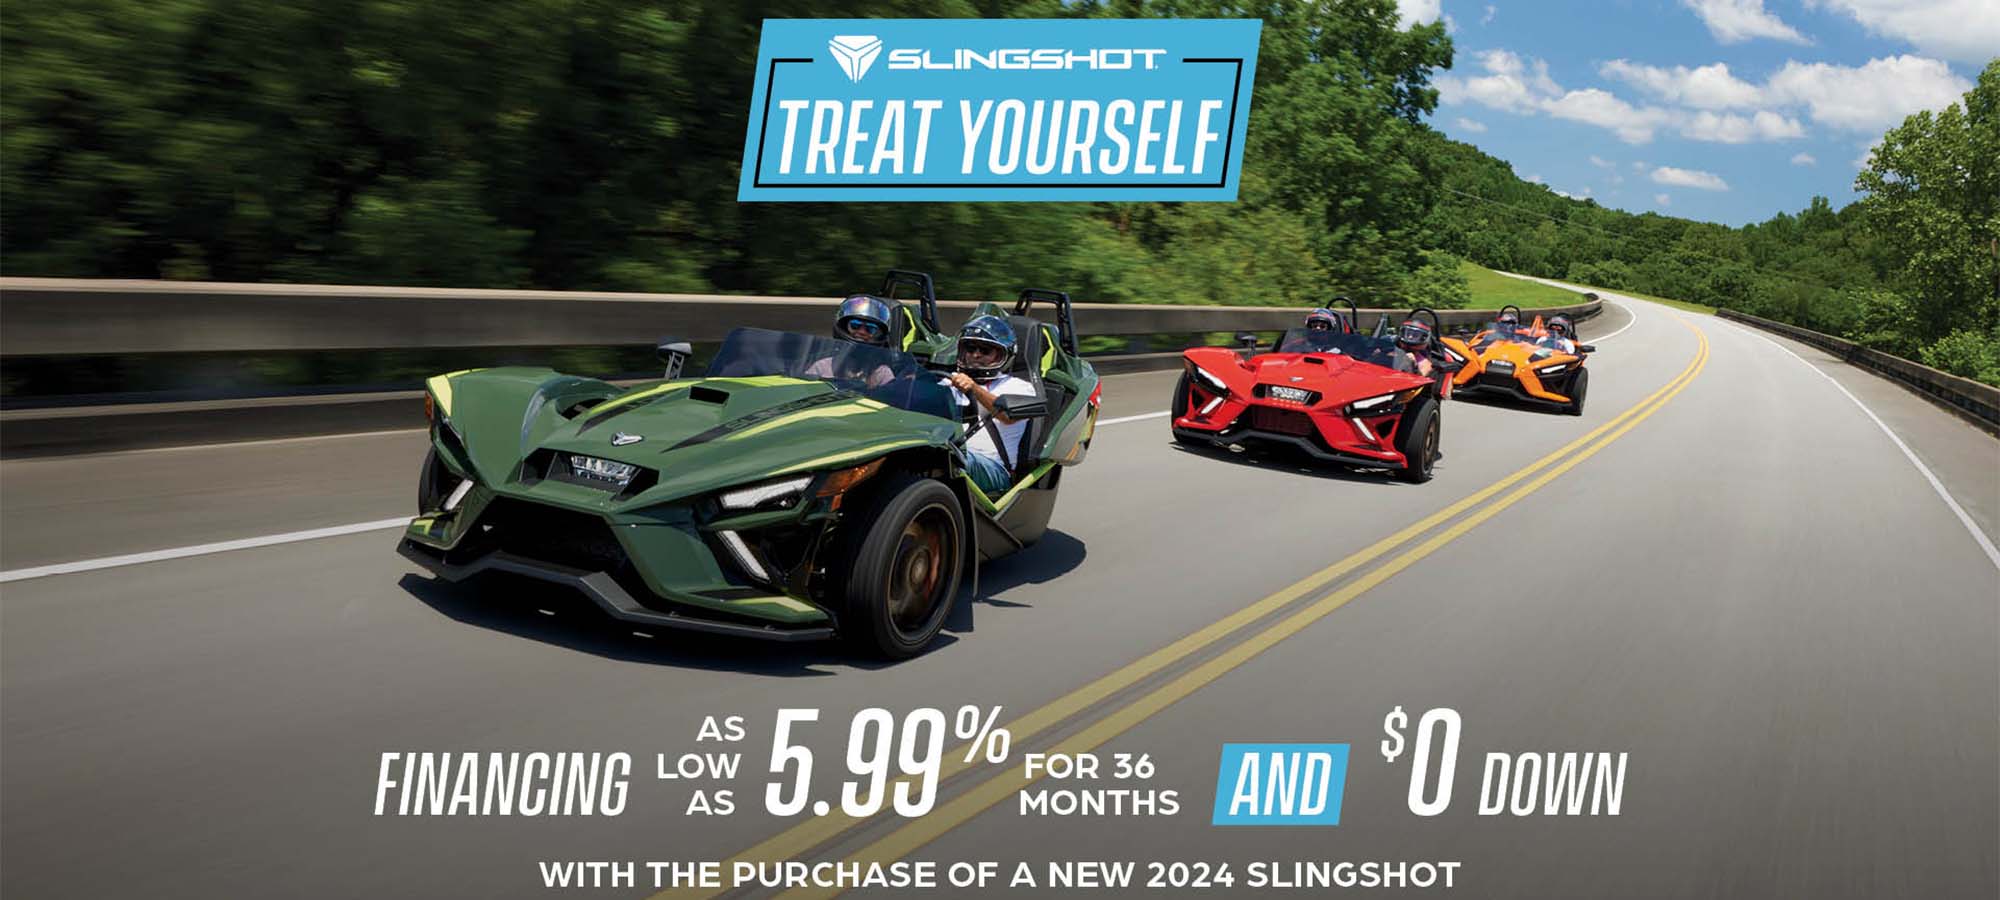 Slingshot US - Treat Yourself - Financing 5.99% at Got Gear Motorsports